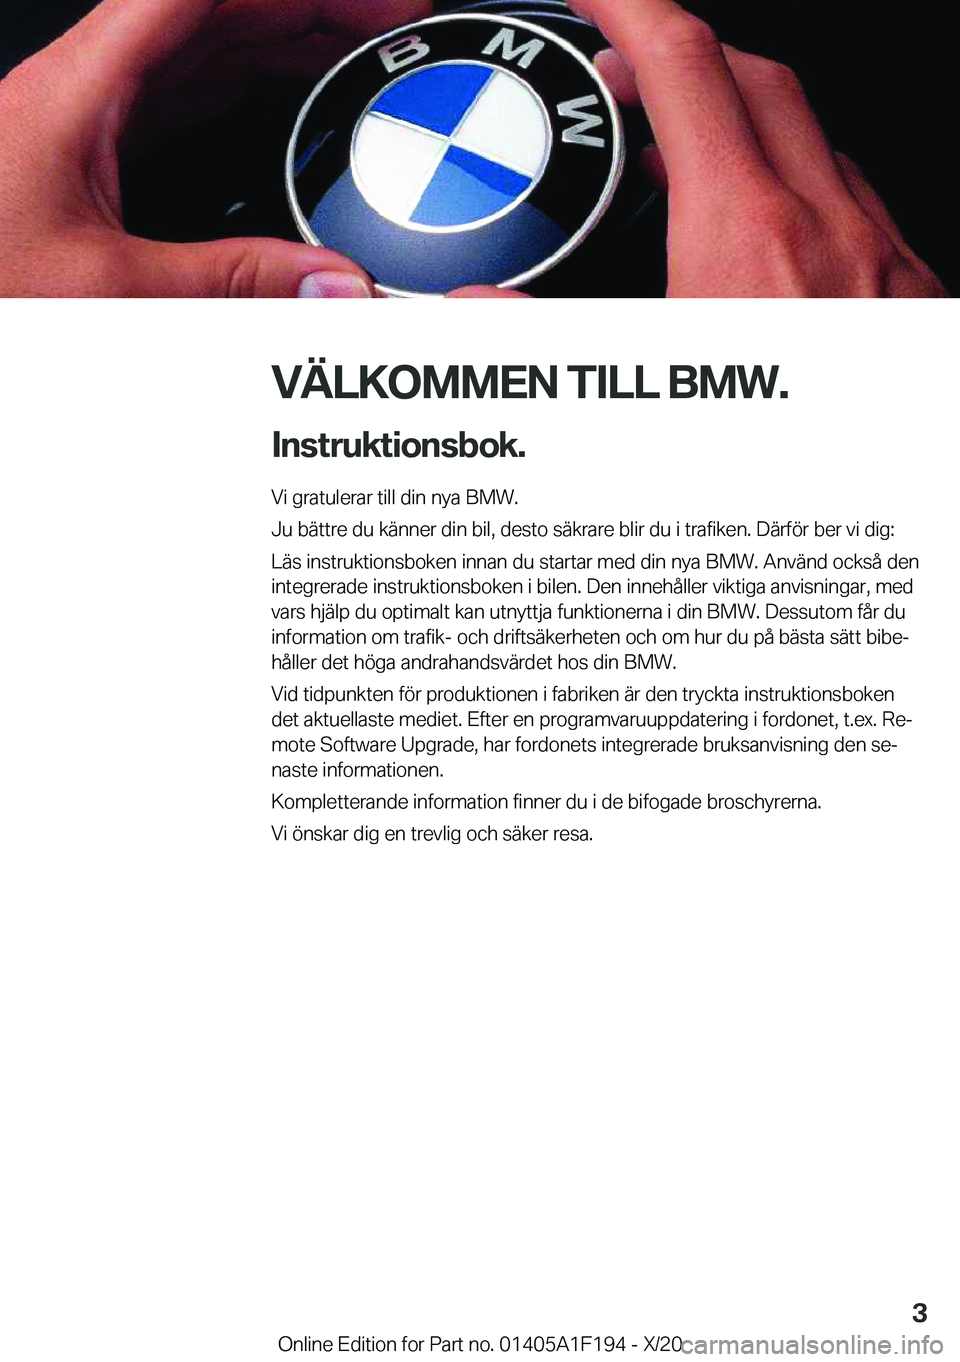 BMW M5 2021  InstruktionsbÖcker (in Swedish) �V�Ä�L�K�O�M�M�E�N��T�I�L�L��B�M�W�.�I�n�s�t�r�u�k�t�i�o�n�s�b�o�k�.
�V�i��g�r�a�t�u�l�e�r�a�r��t�i�l�l��d�i�n��n�y�a��B�M�W�.
�J�u��b�ä�t�t�r�e��d�u��k�ä�n�n�e�r��d�i�n��b�i�l�,��d�e�